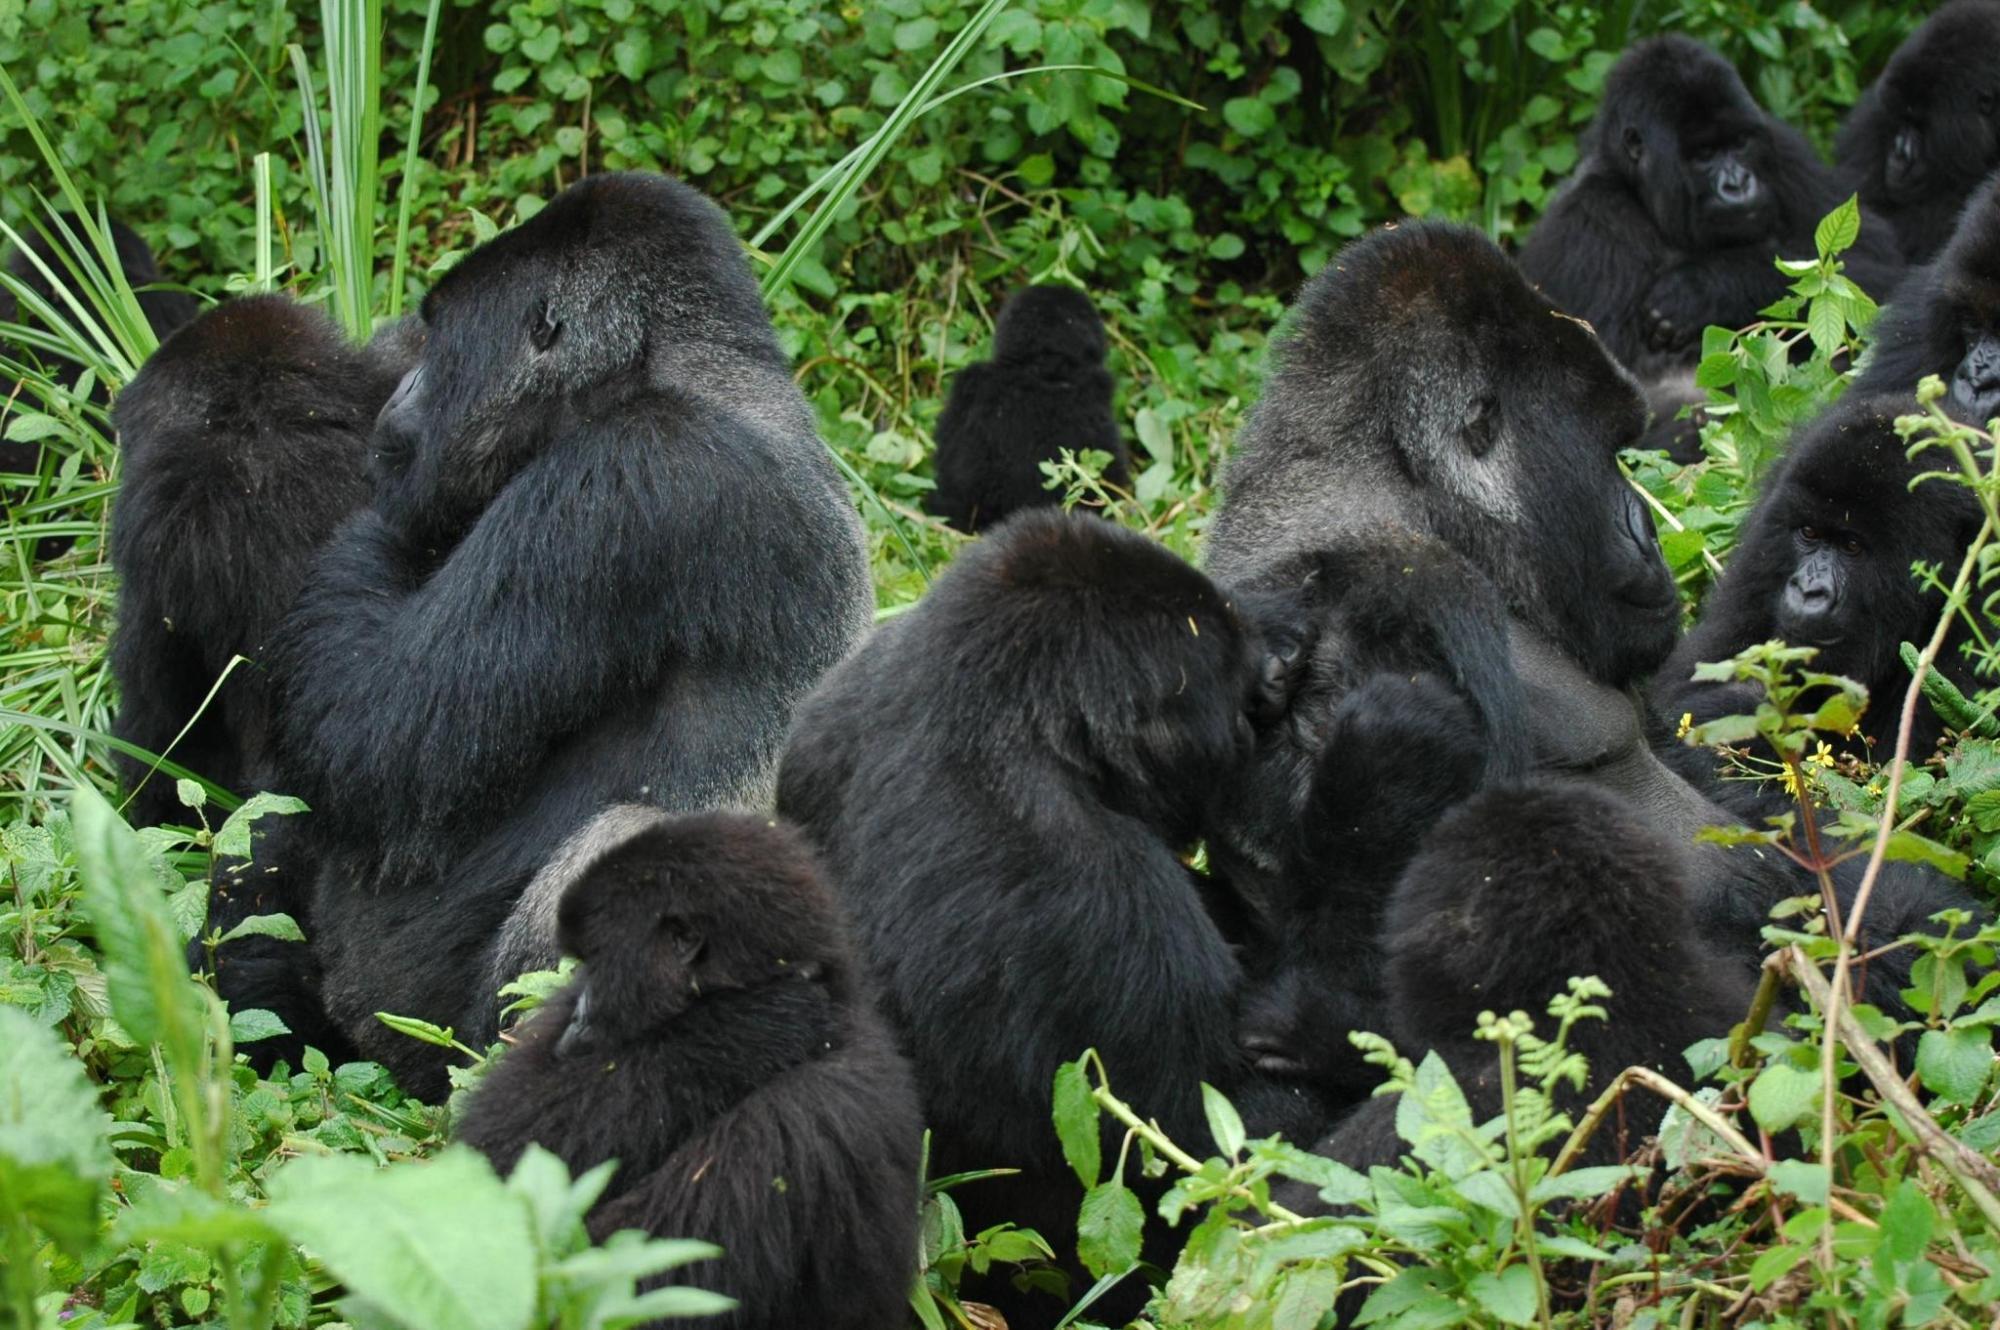 Gene flow from an extinct gorilla population to eastern gorillas discovered